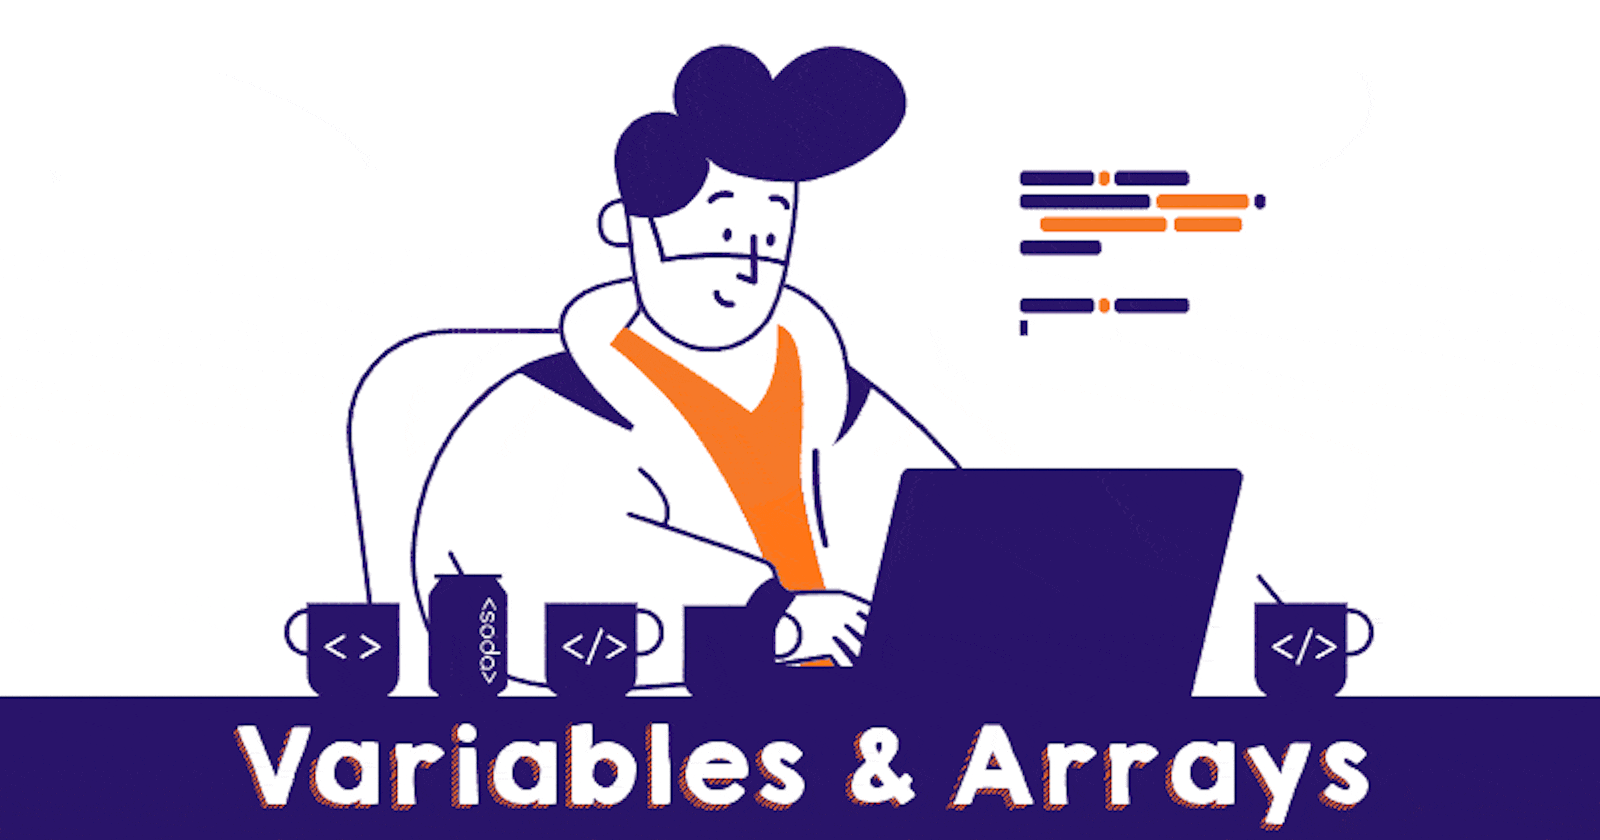 JavaScript for Beginners: Variables & Arrays